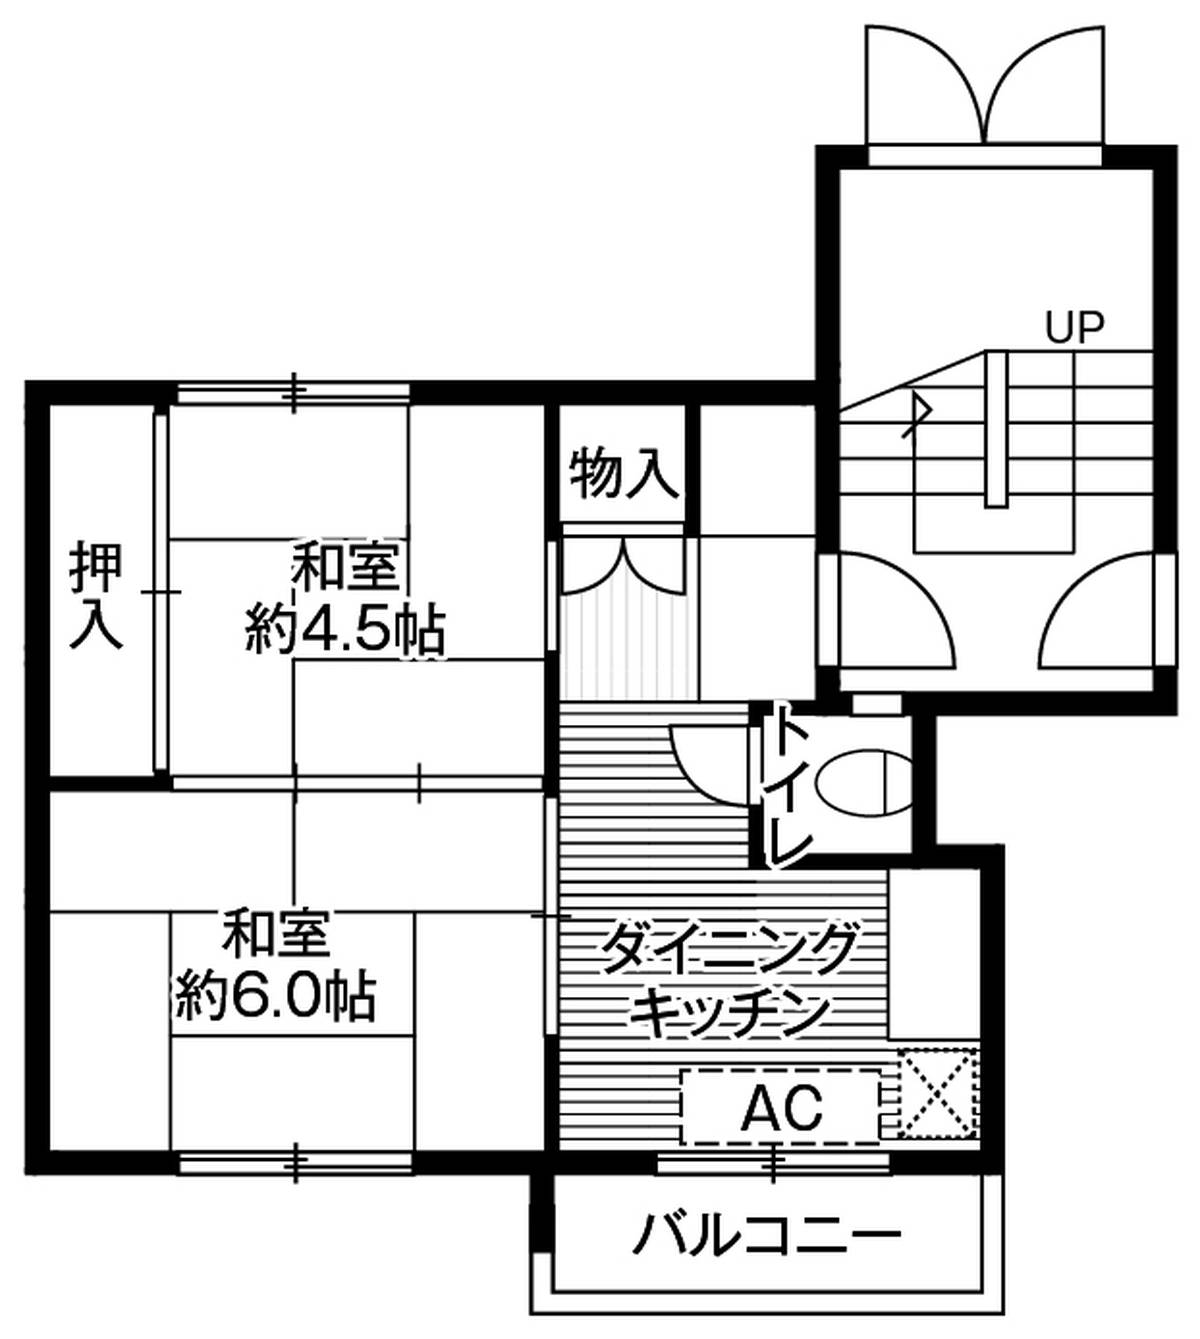 2K floorplan of Village House Takahira in Muroran-shi